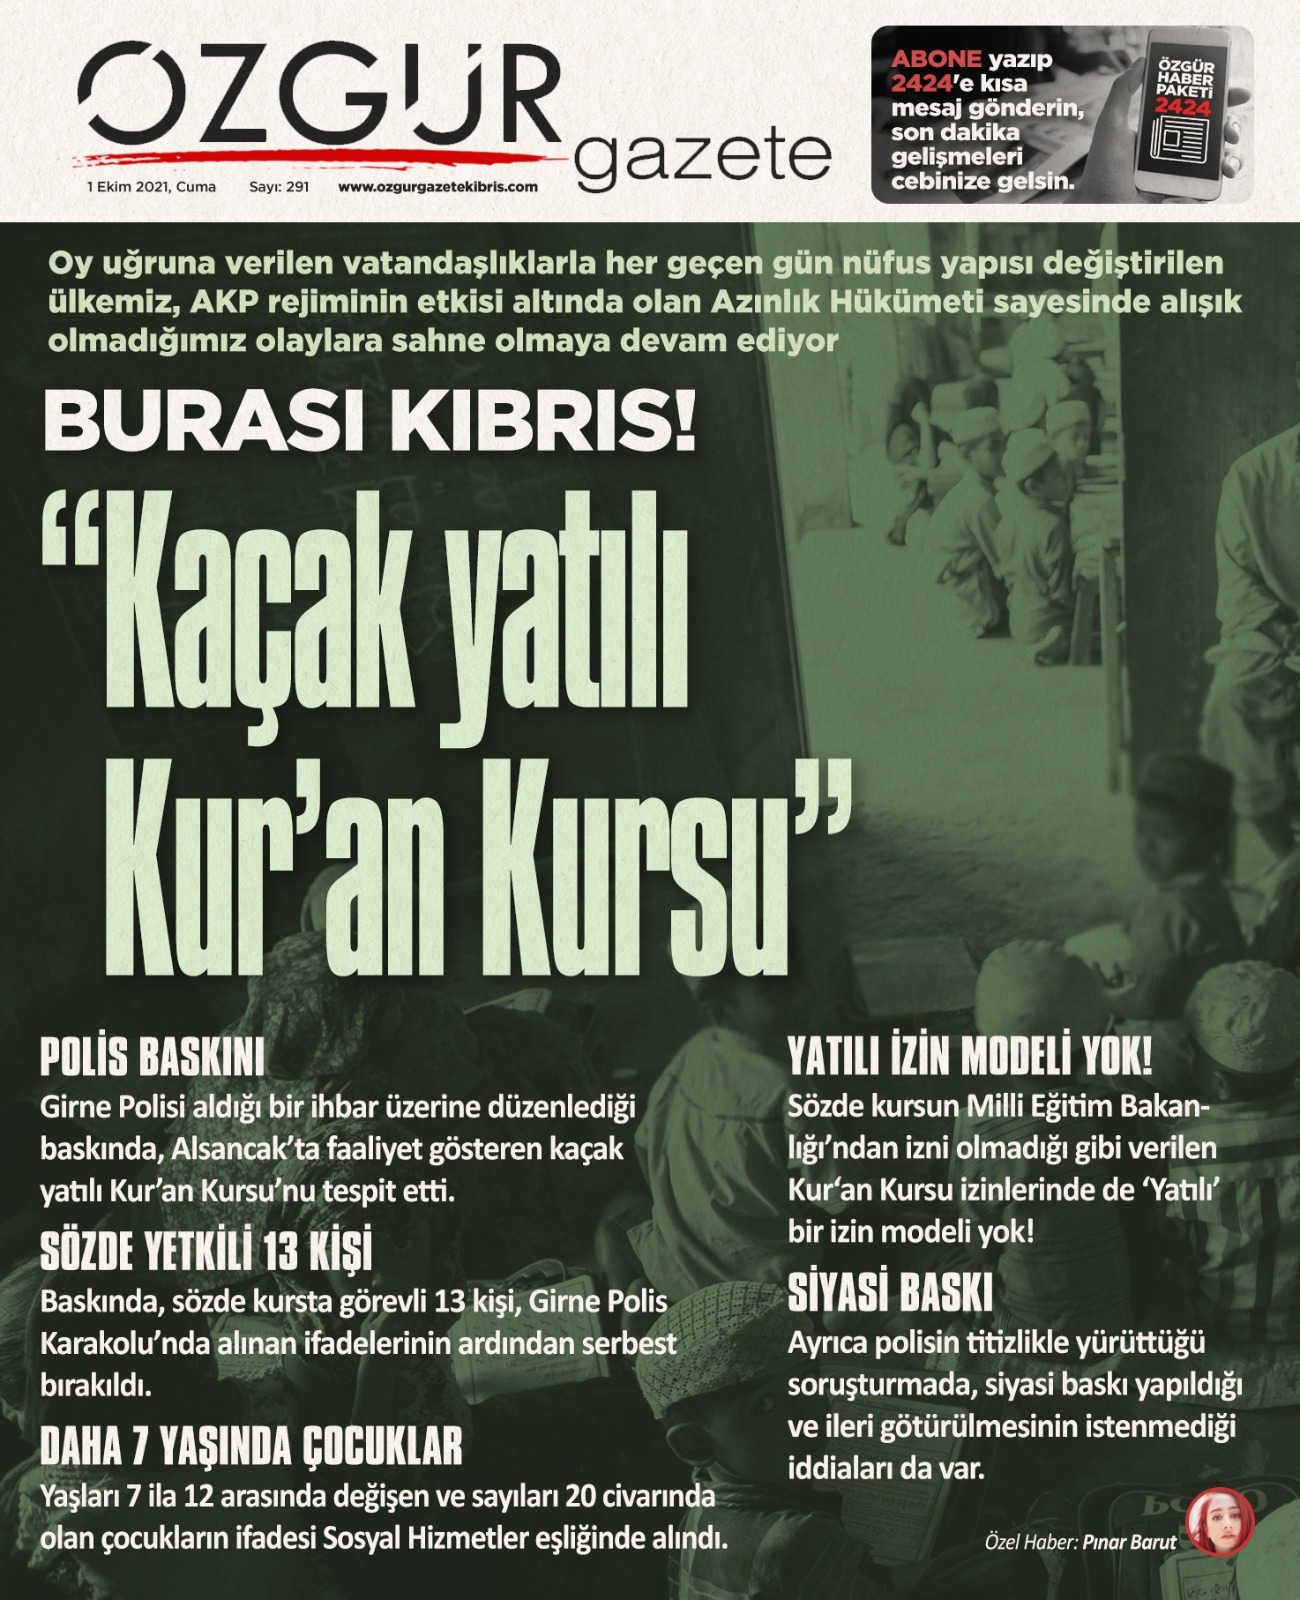 ozgur_gazete_kibris_kacak_kuran_kursu_alsancak